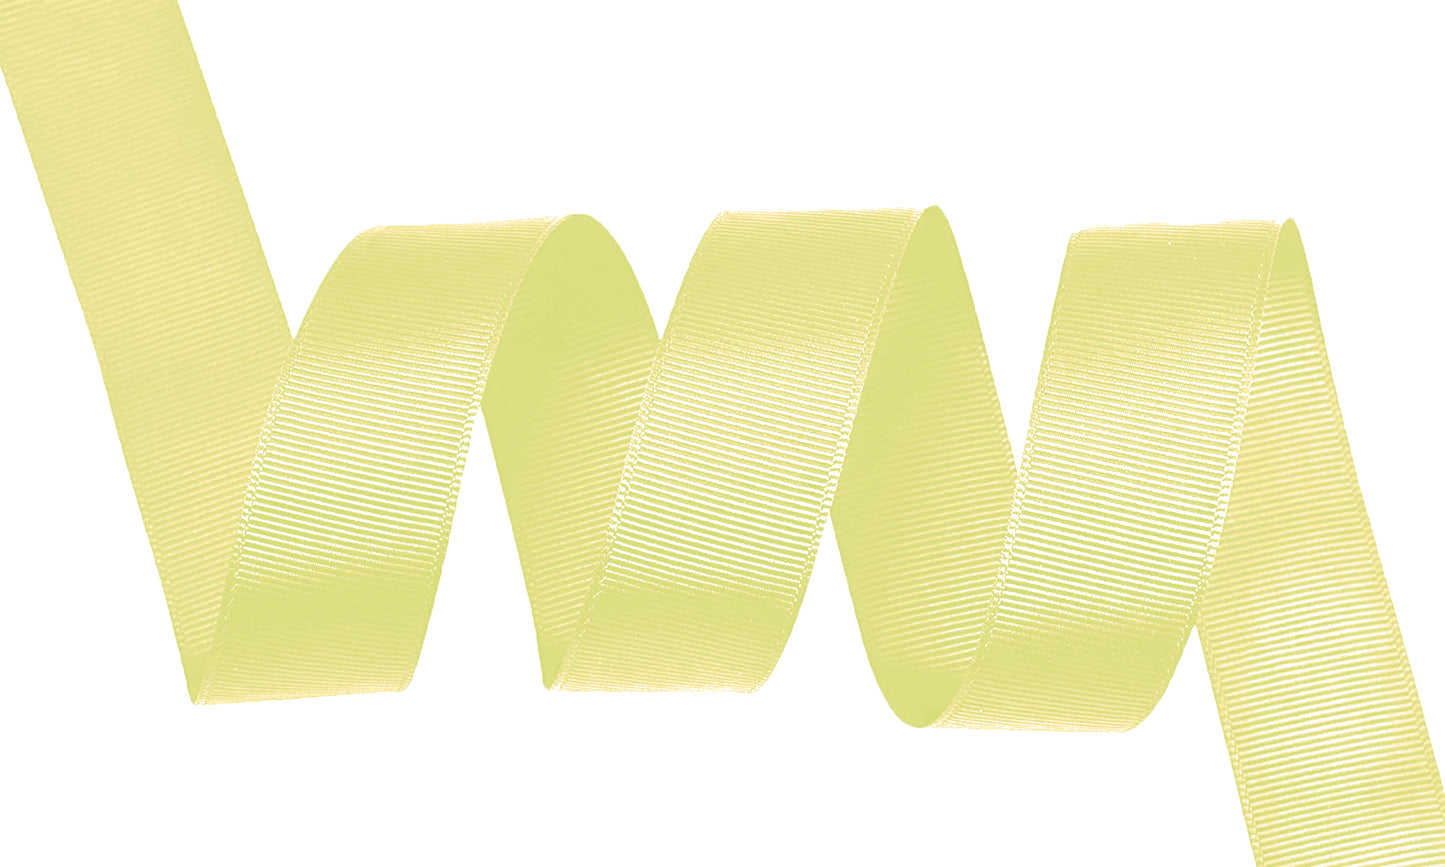 5 Yards Solid Light Yellow Grosgrain Ribbon Yardage DIY Crafts Bows USA